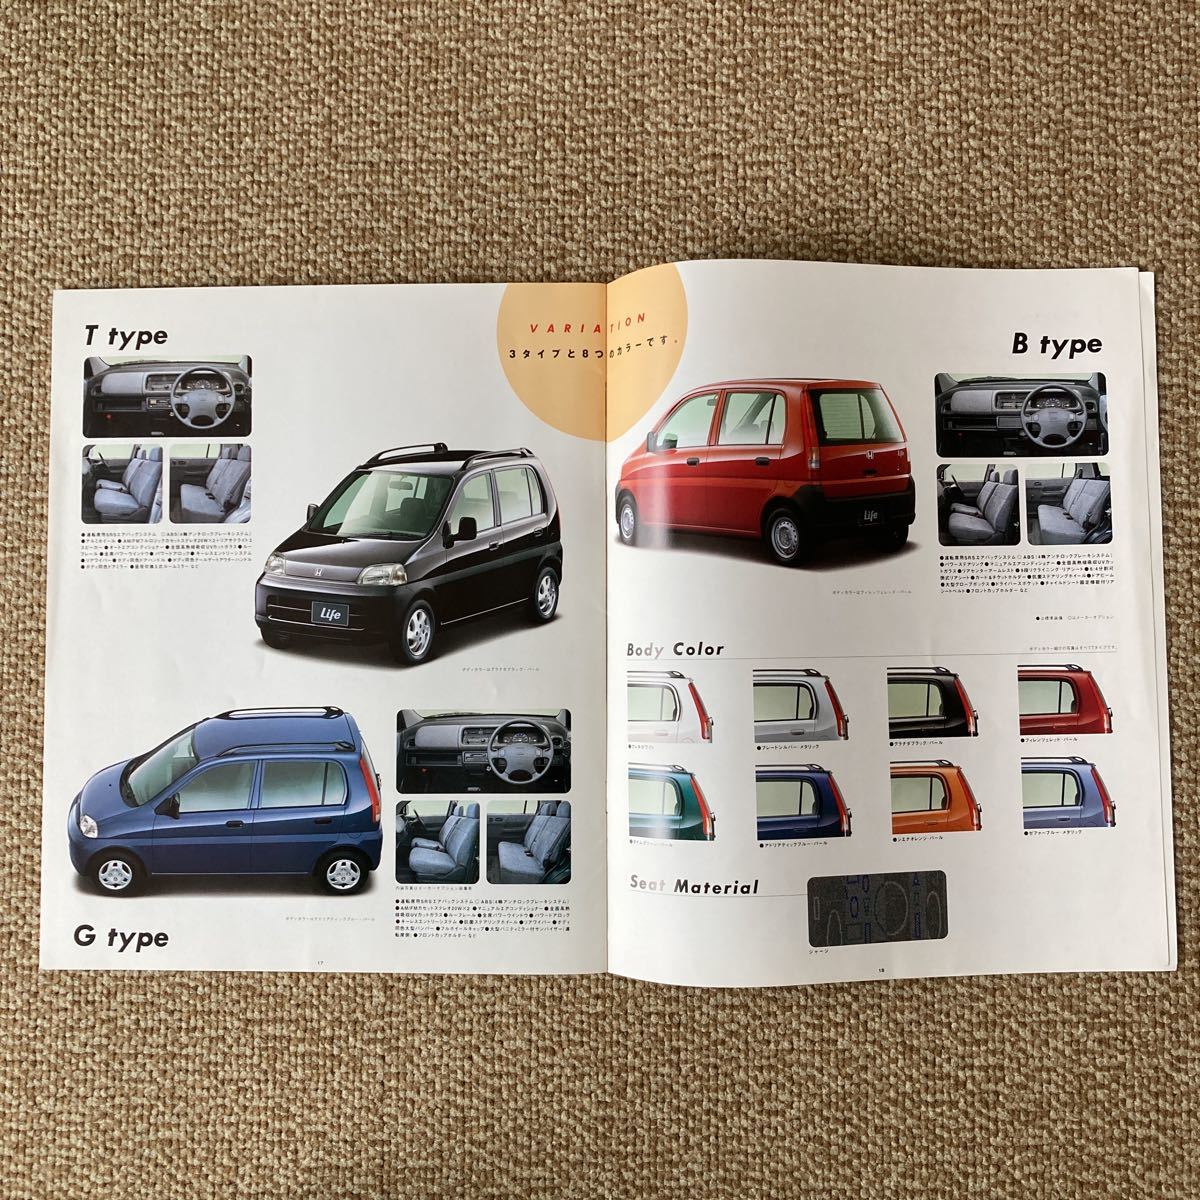  Honda Life catalog 1997 year 4 month 